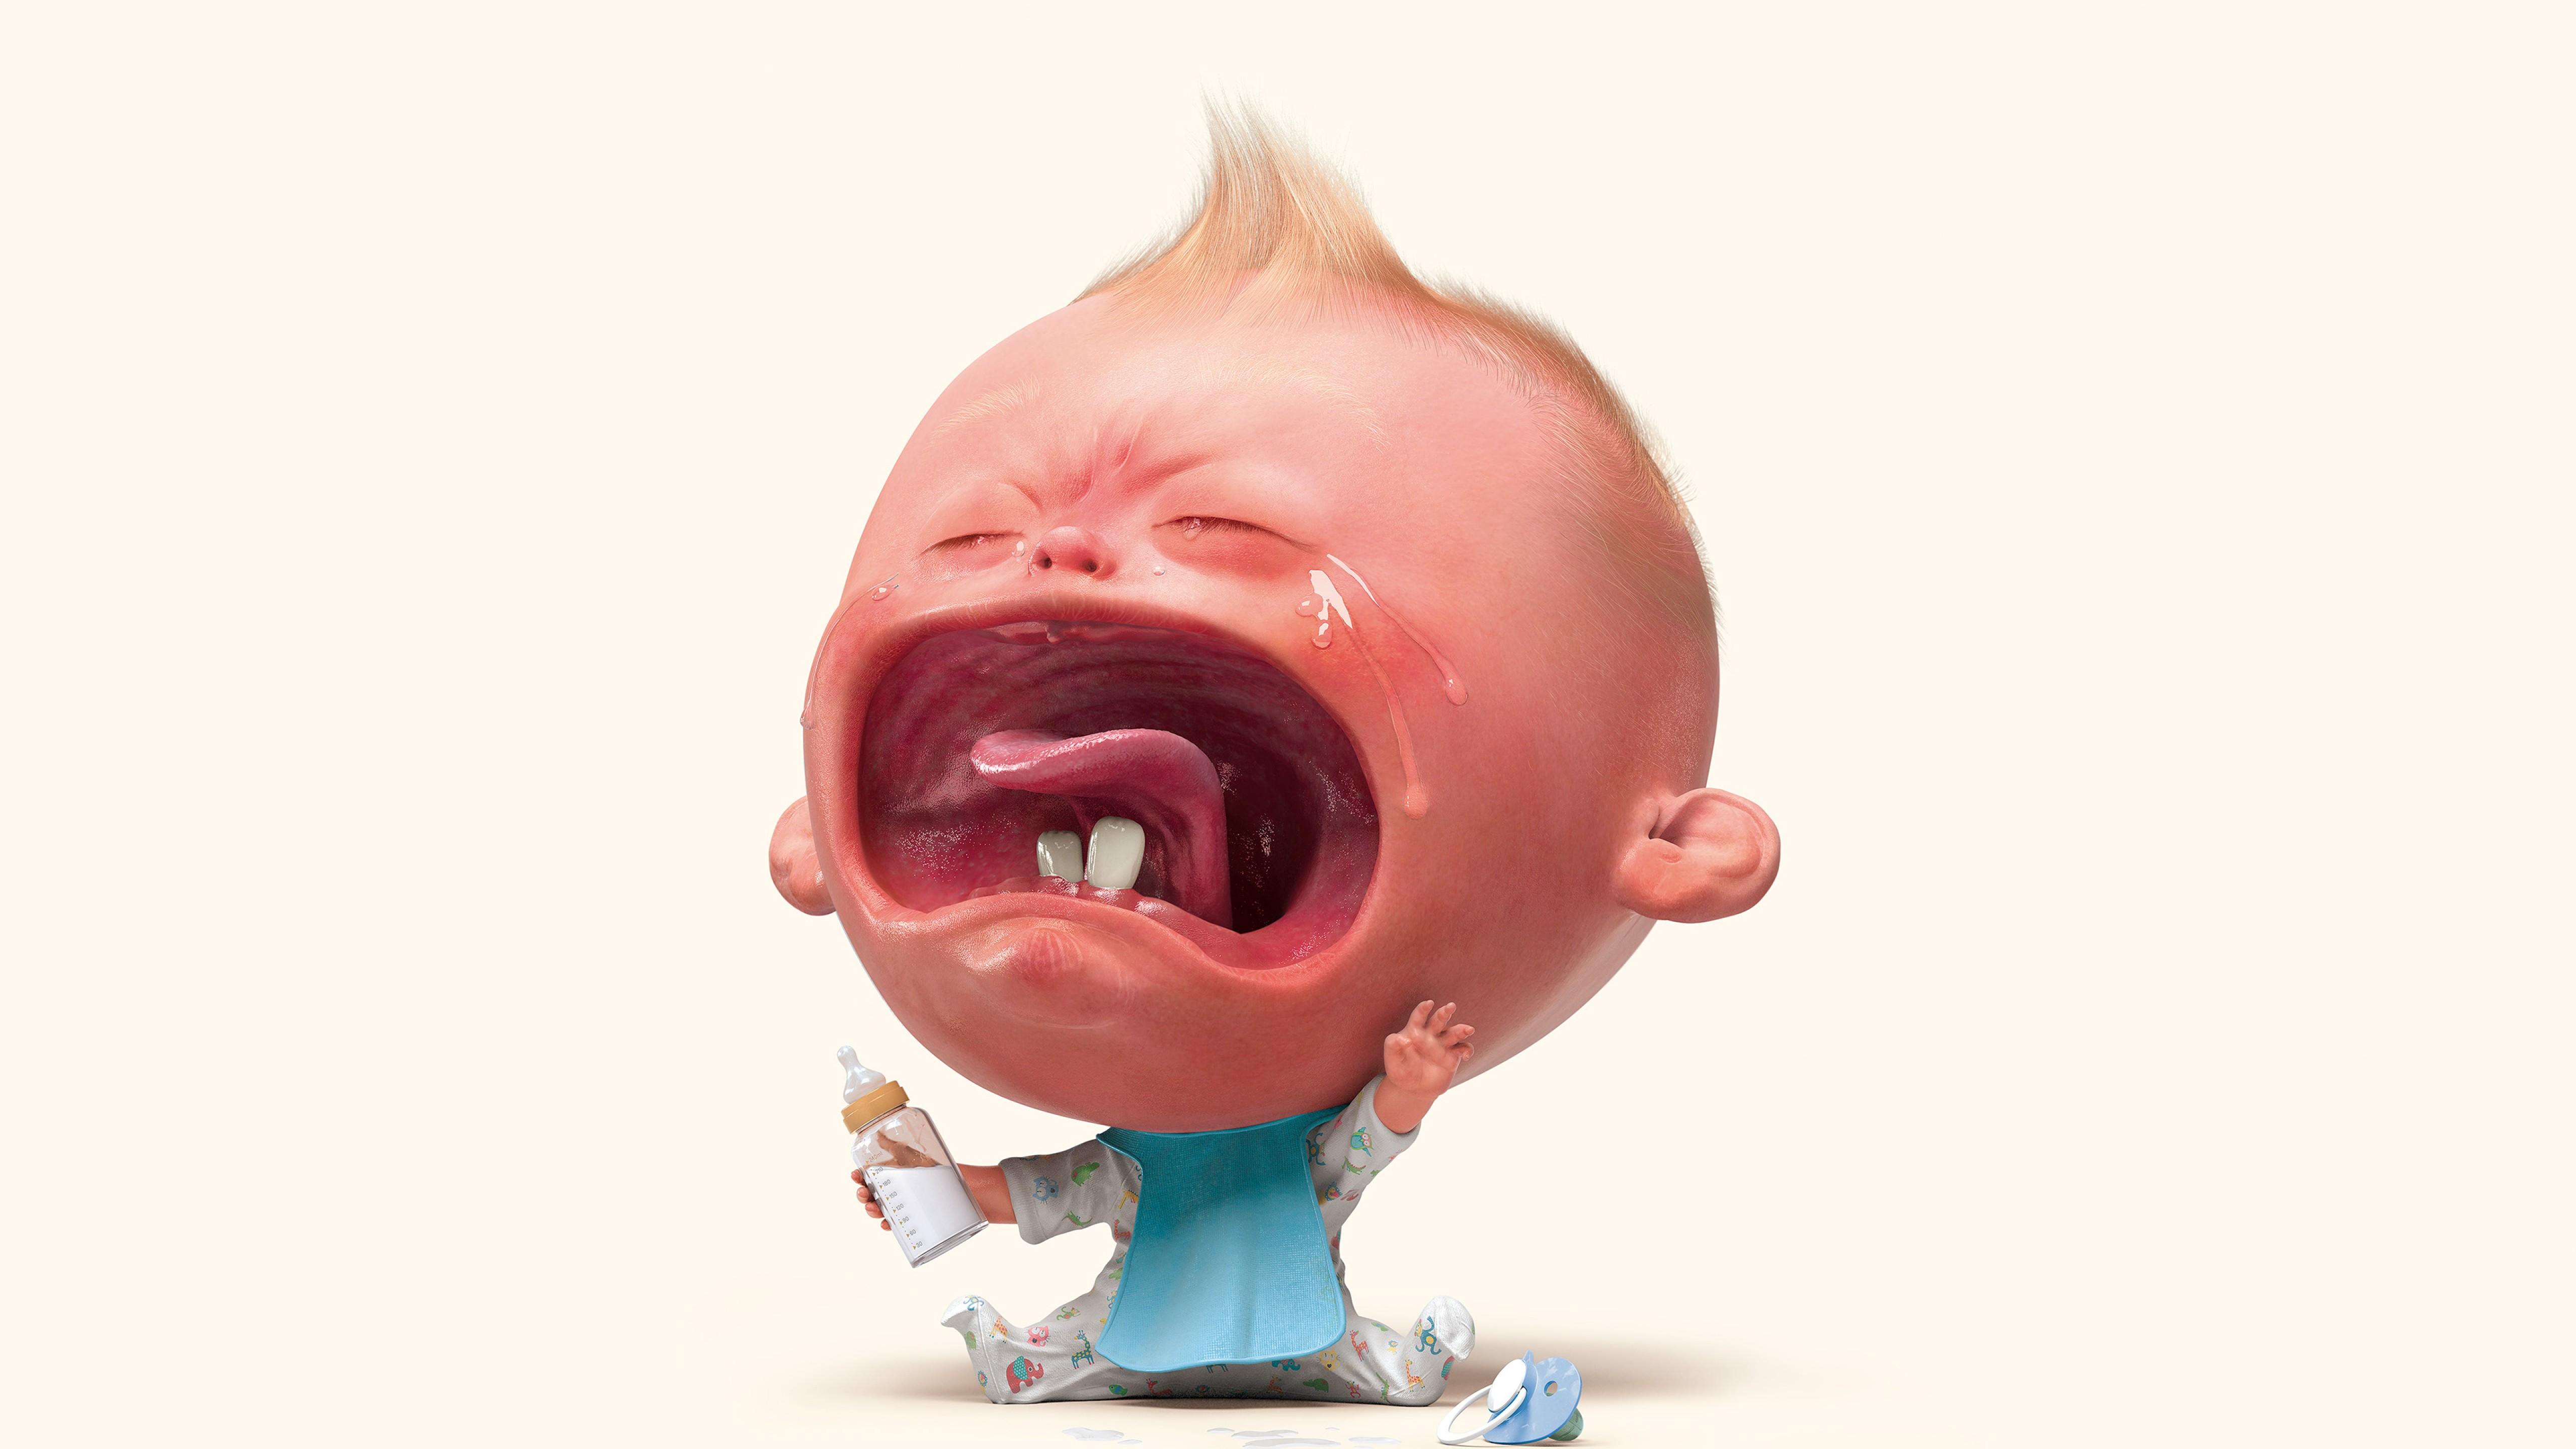 Wallpaper Baby crying, HD, 4K, Creative Graphics